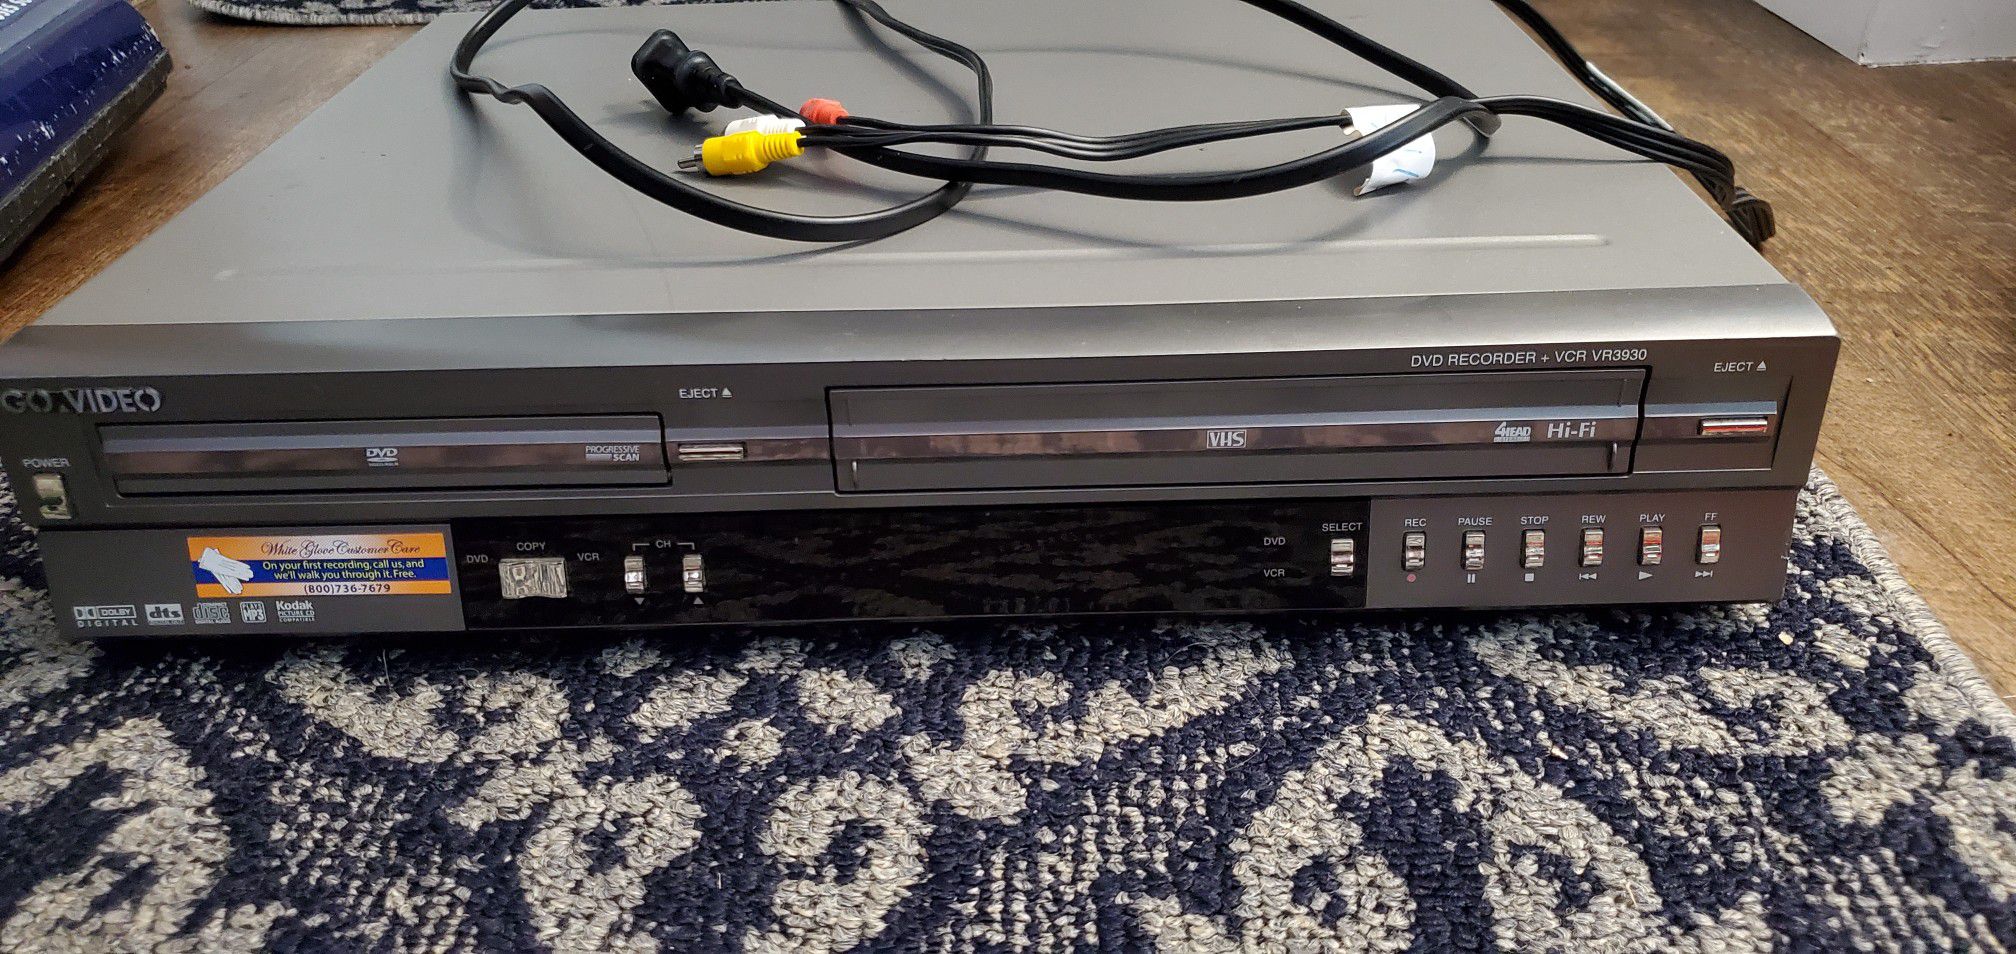 VCR/DVD player